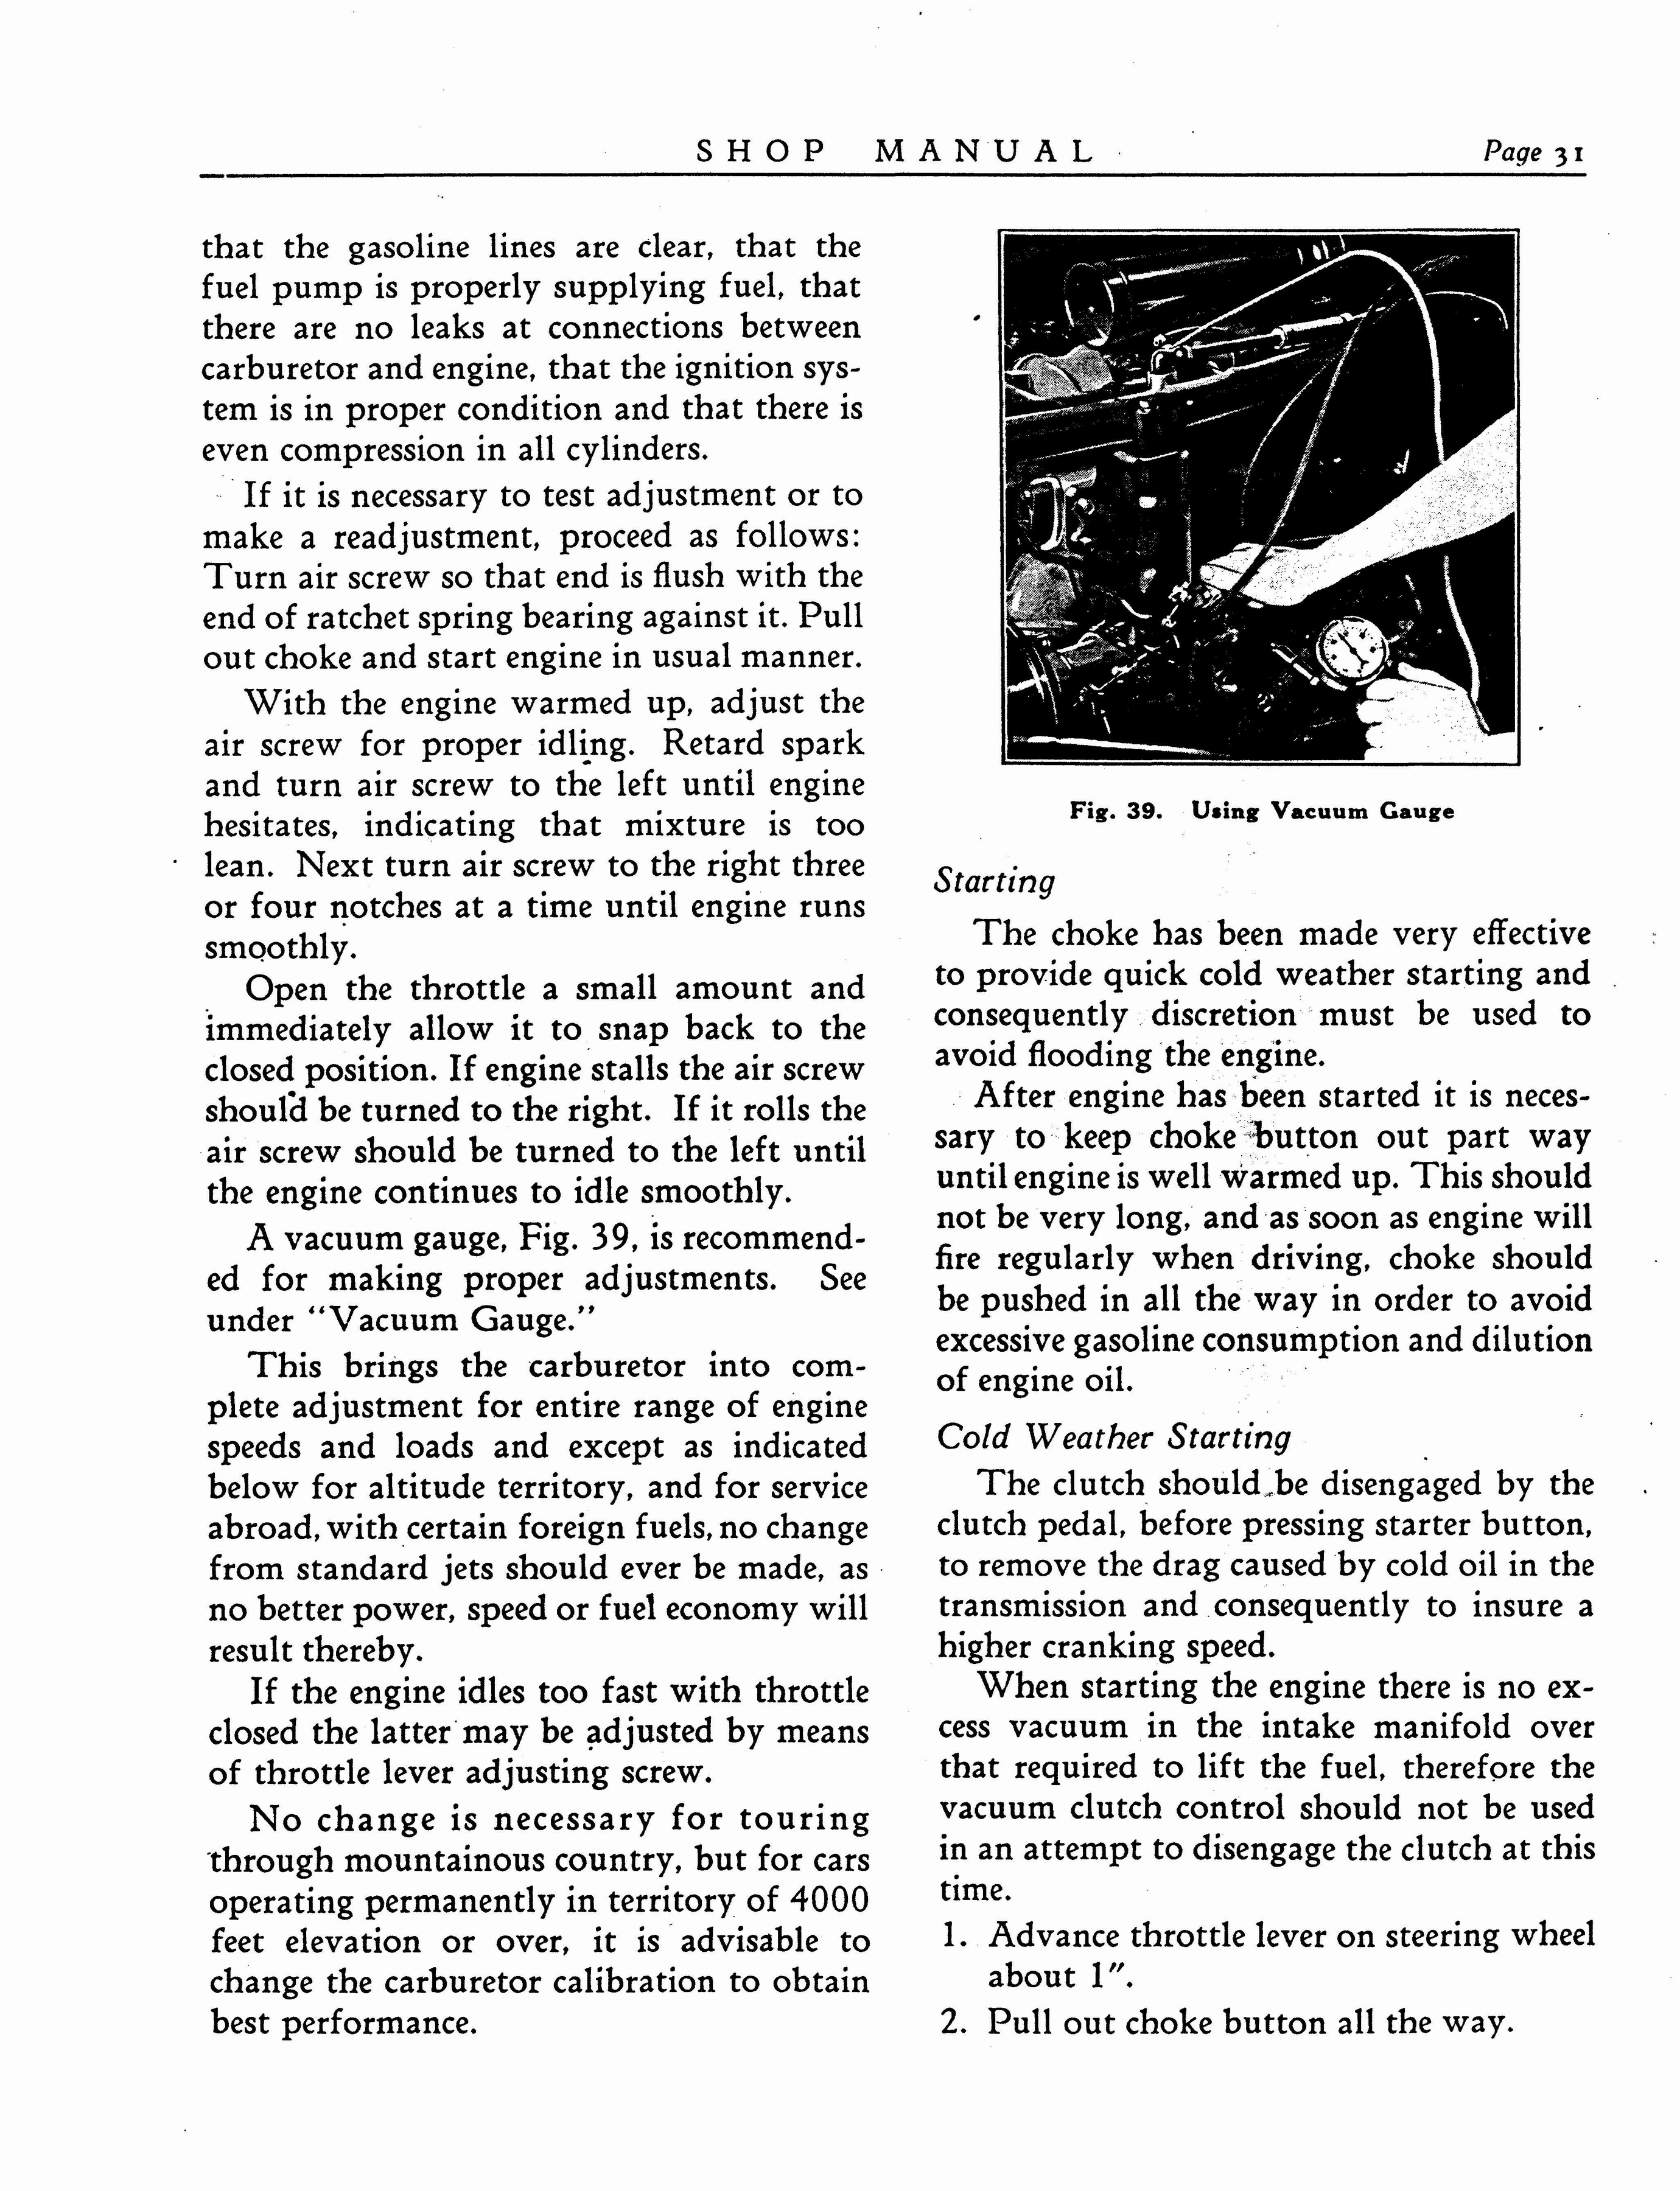 n_1933 Buick Shop Manual_Page_032.jpg